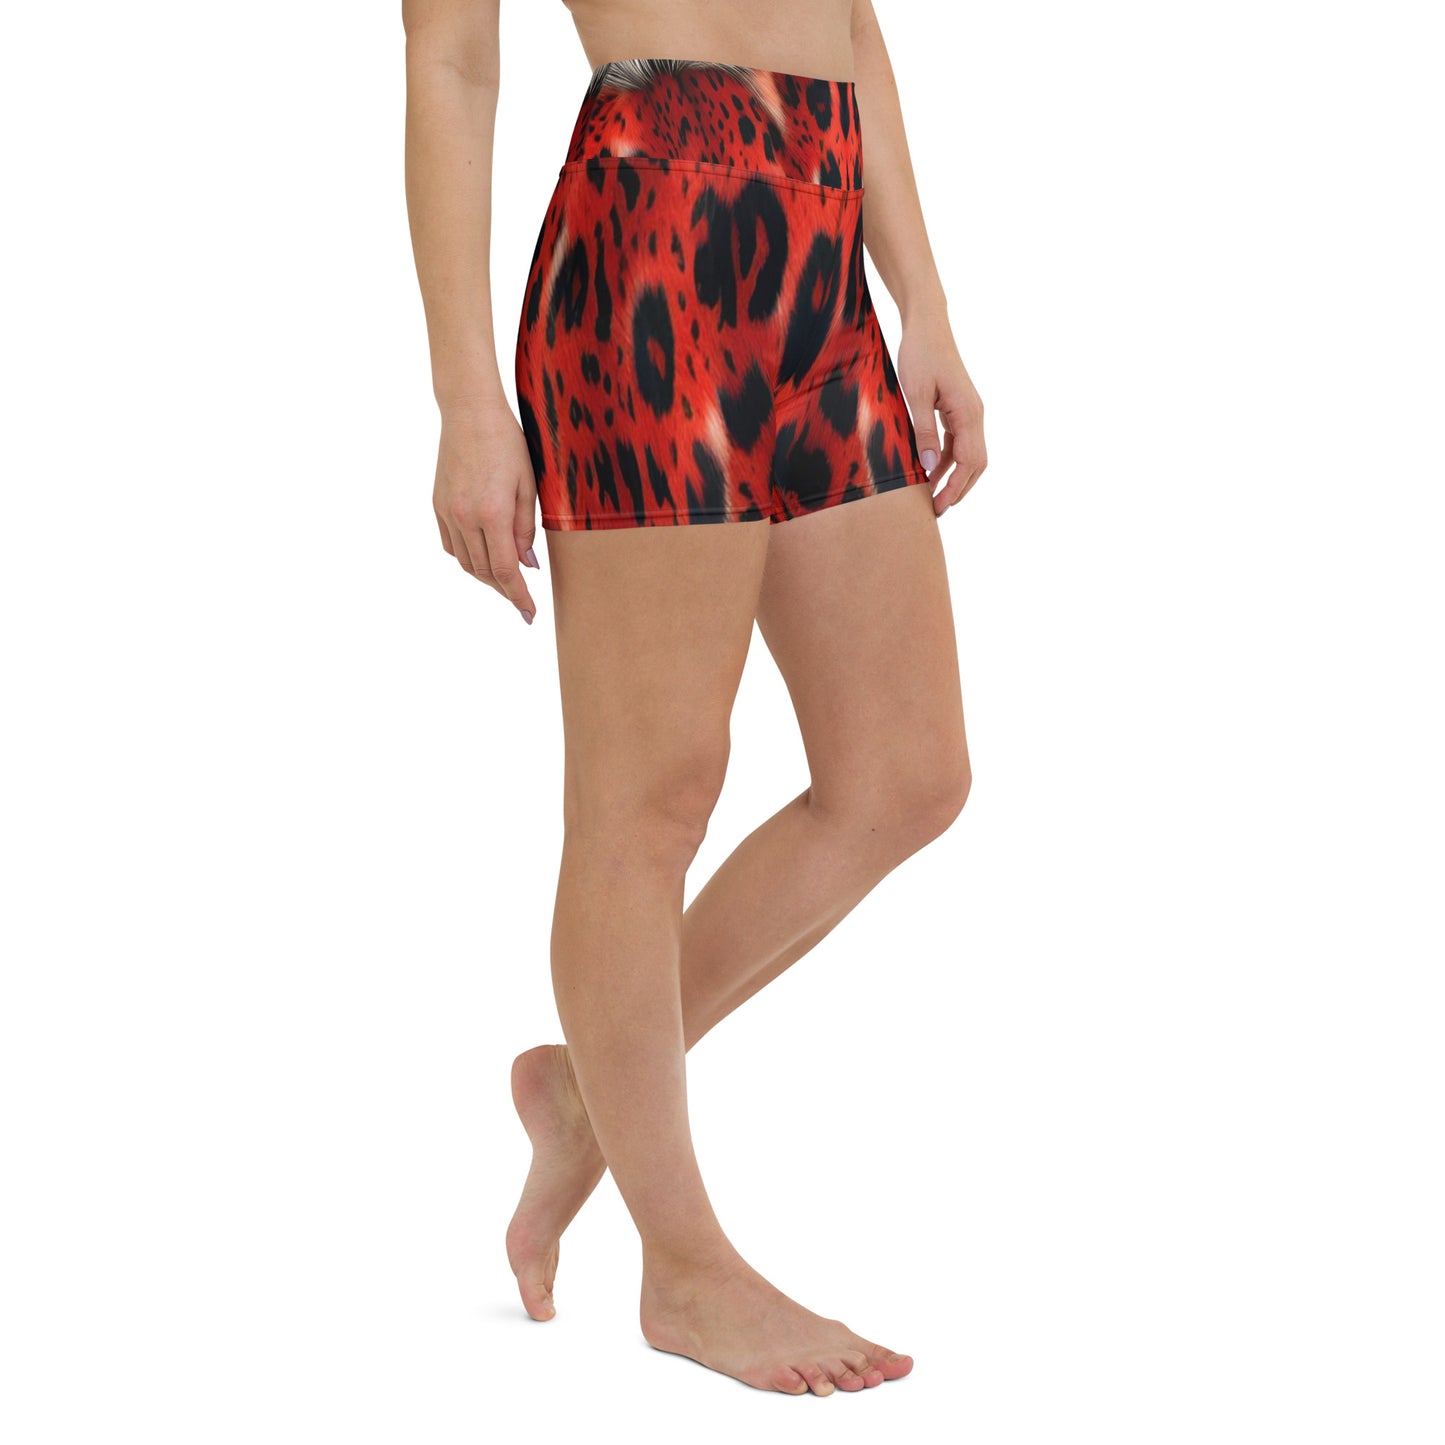 Red Leopard Fur Custom Print Yoga Shorts